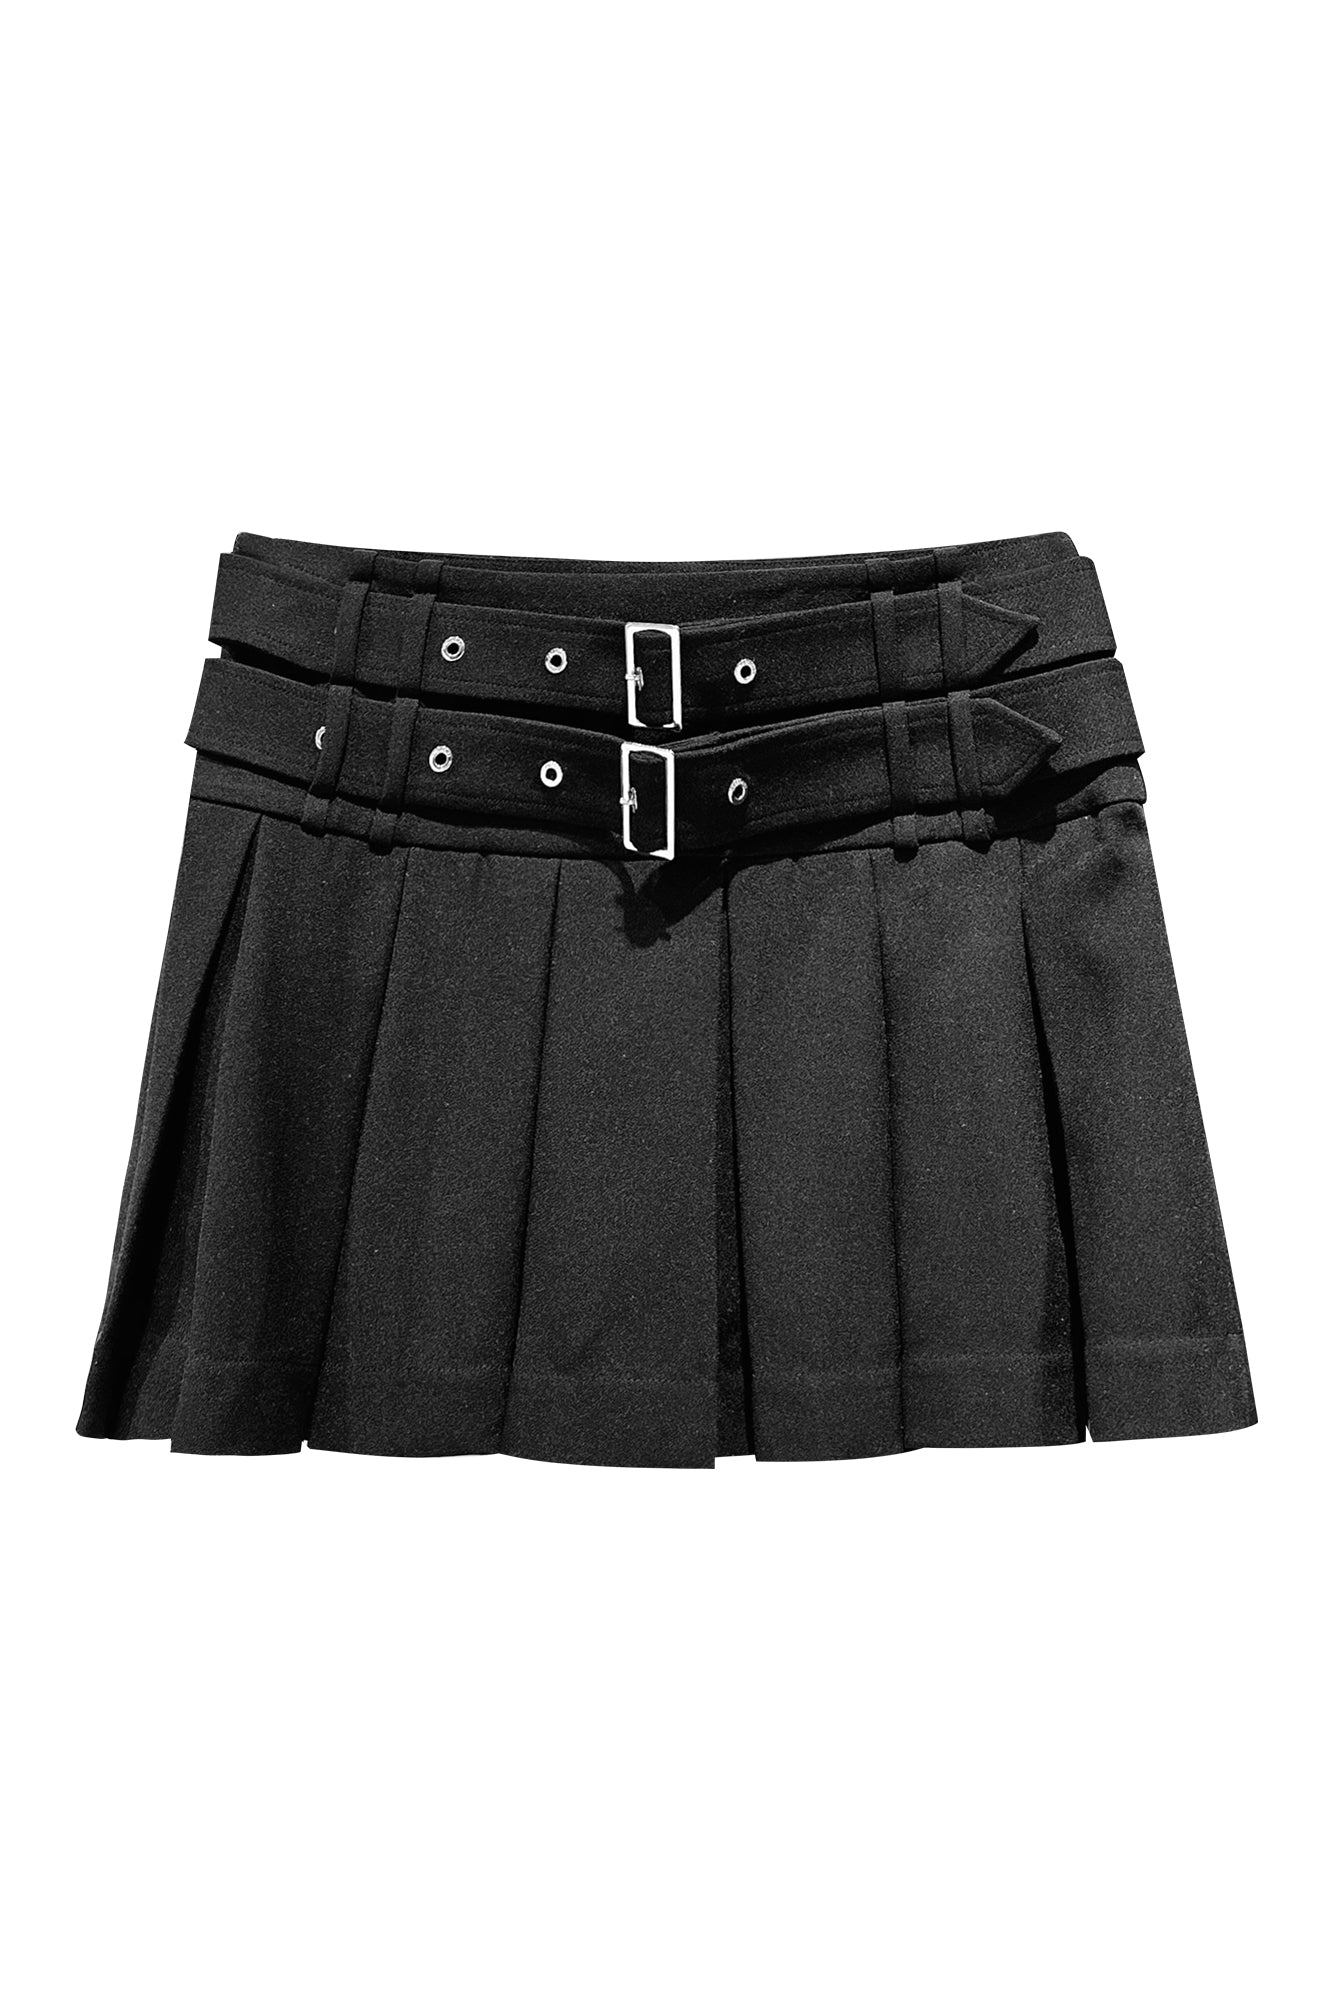 Retro pleated short skirt